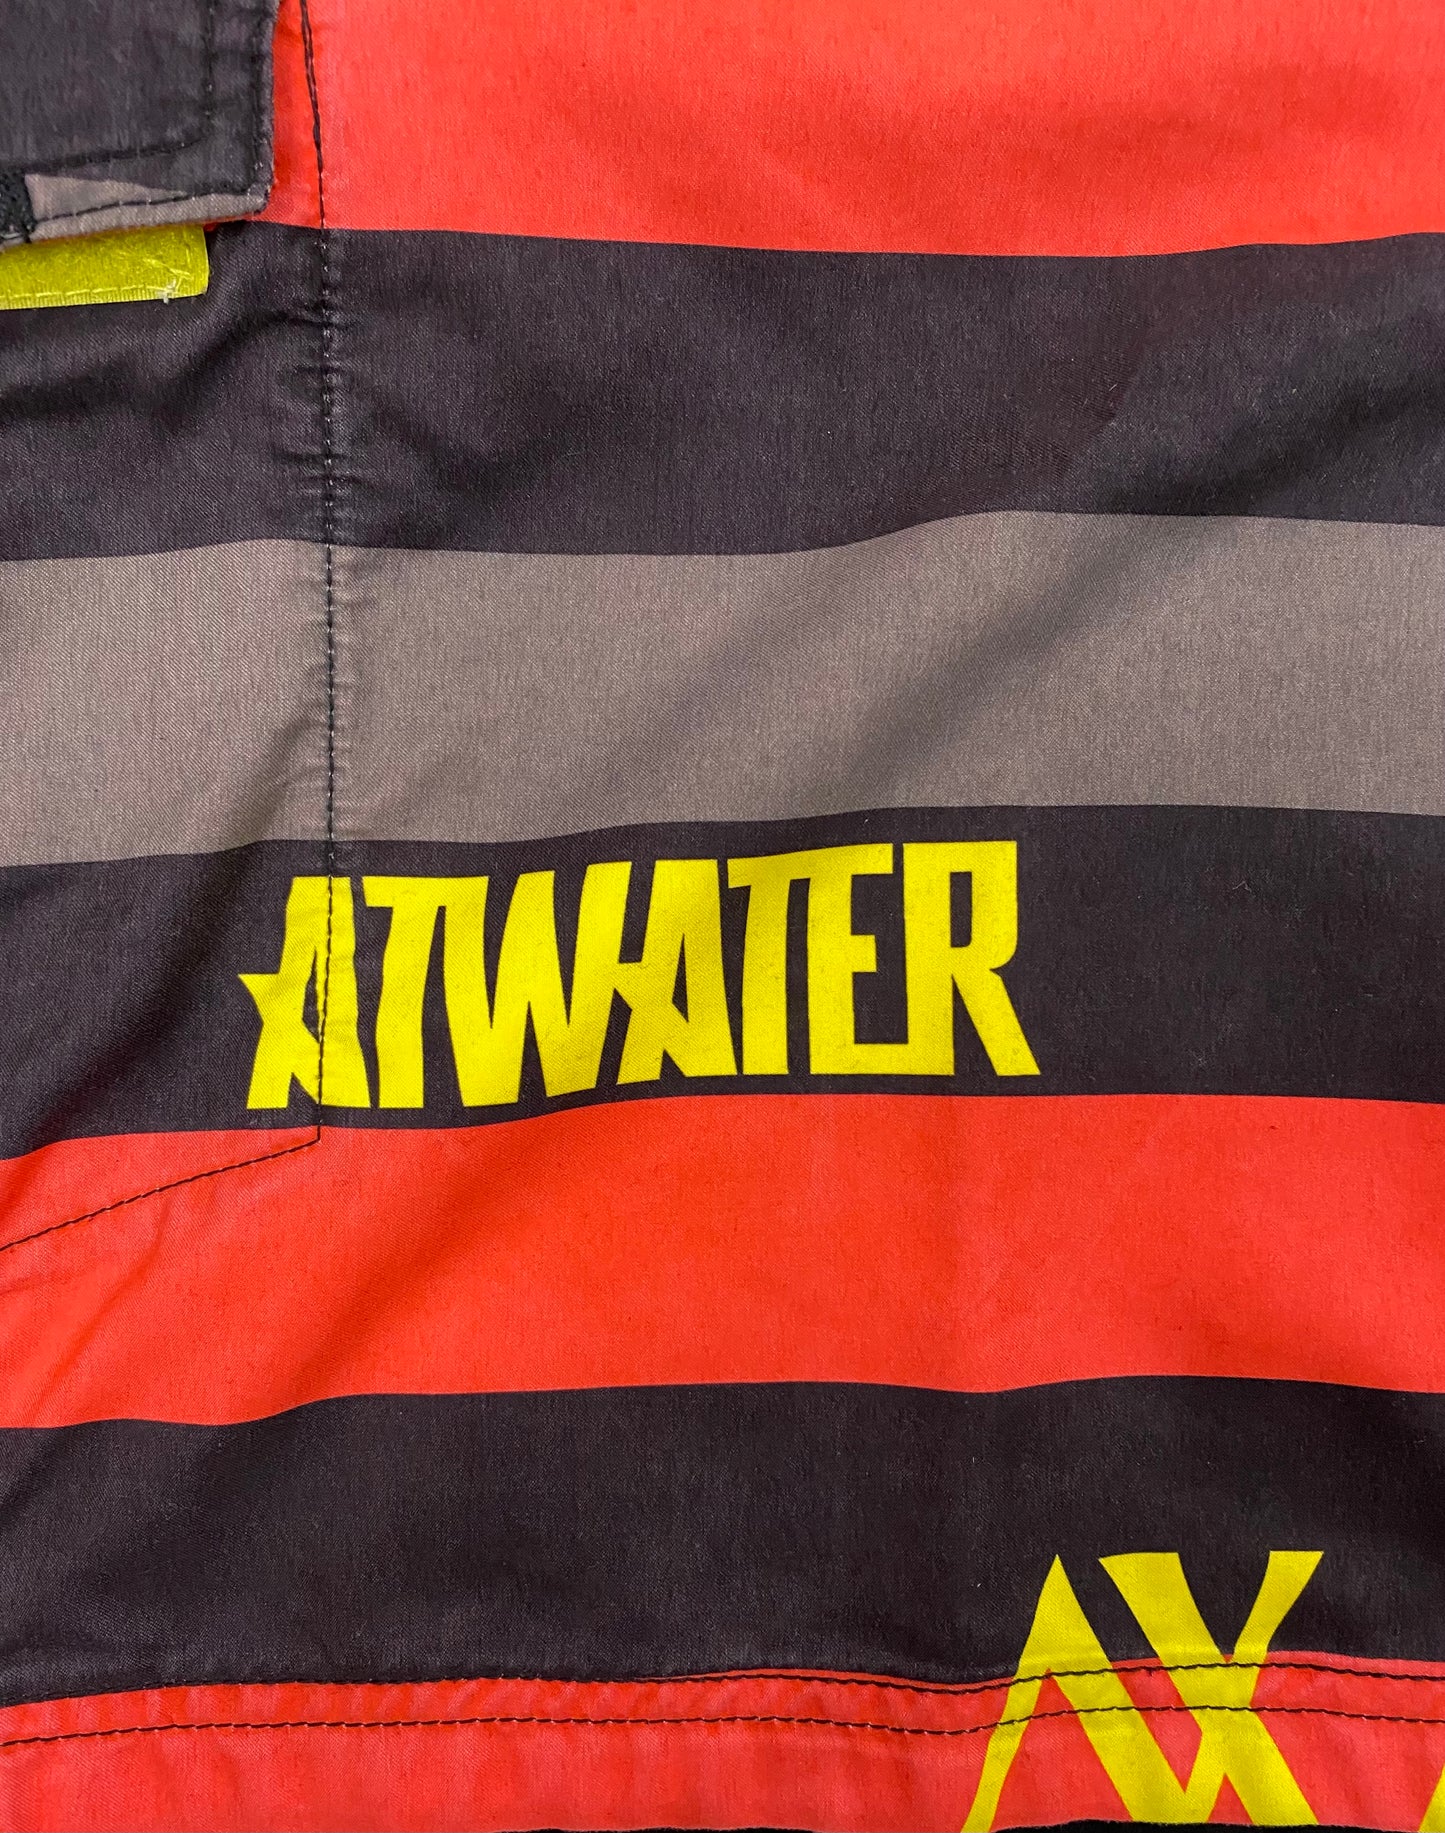 ATWATER Men's Board Shorts, Size 36, SKU 000313-1